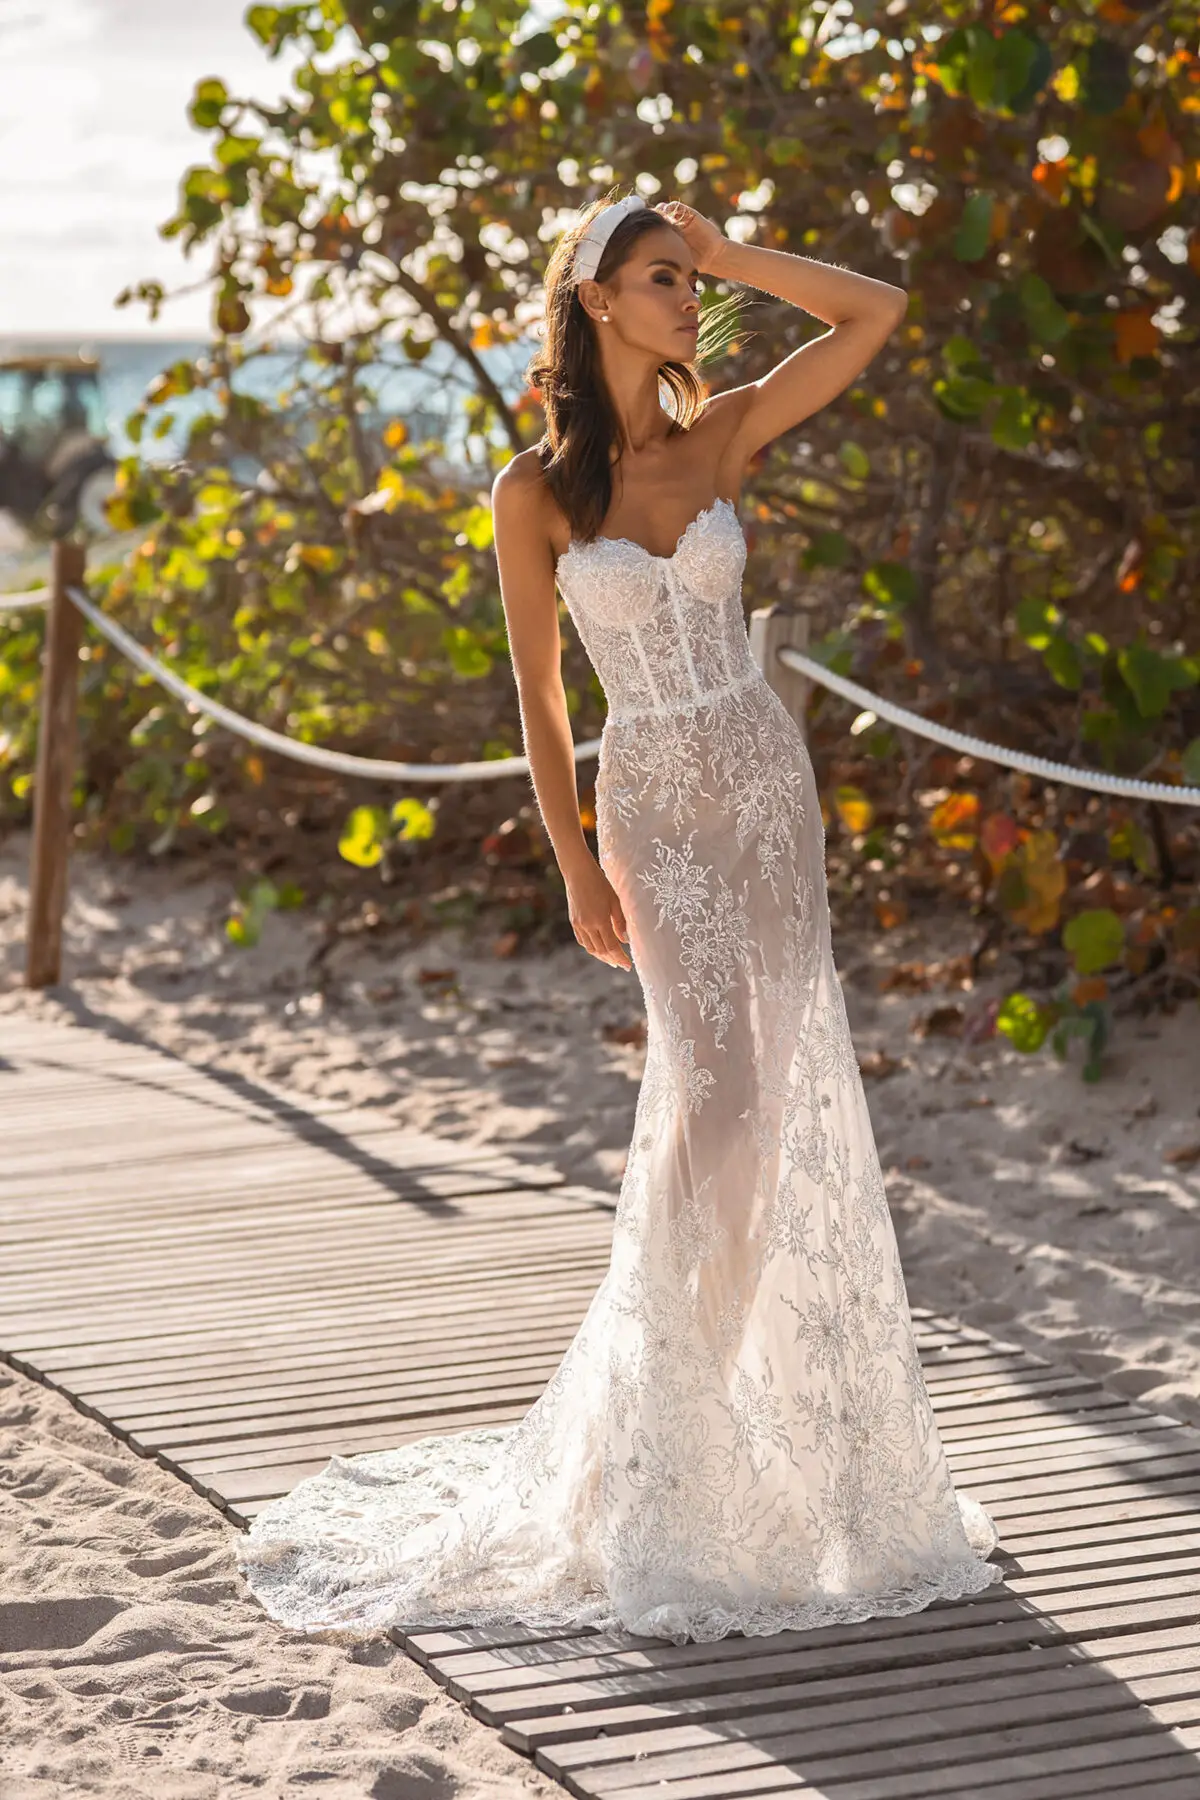 Nata by Oliver Martino wedding dress